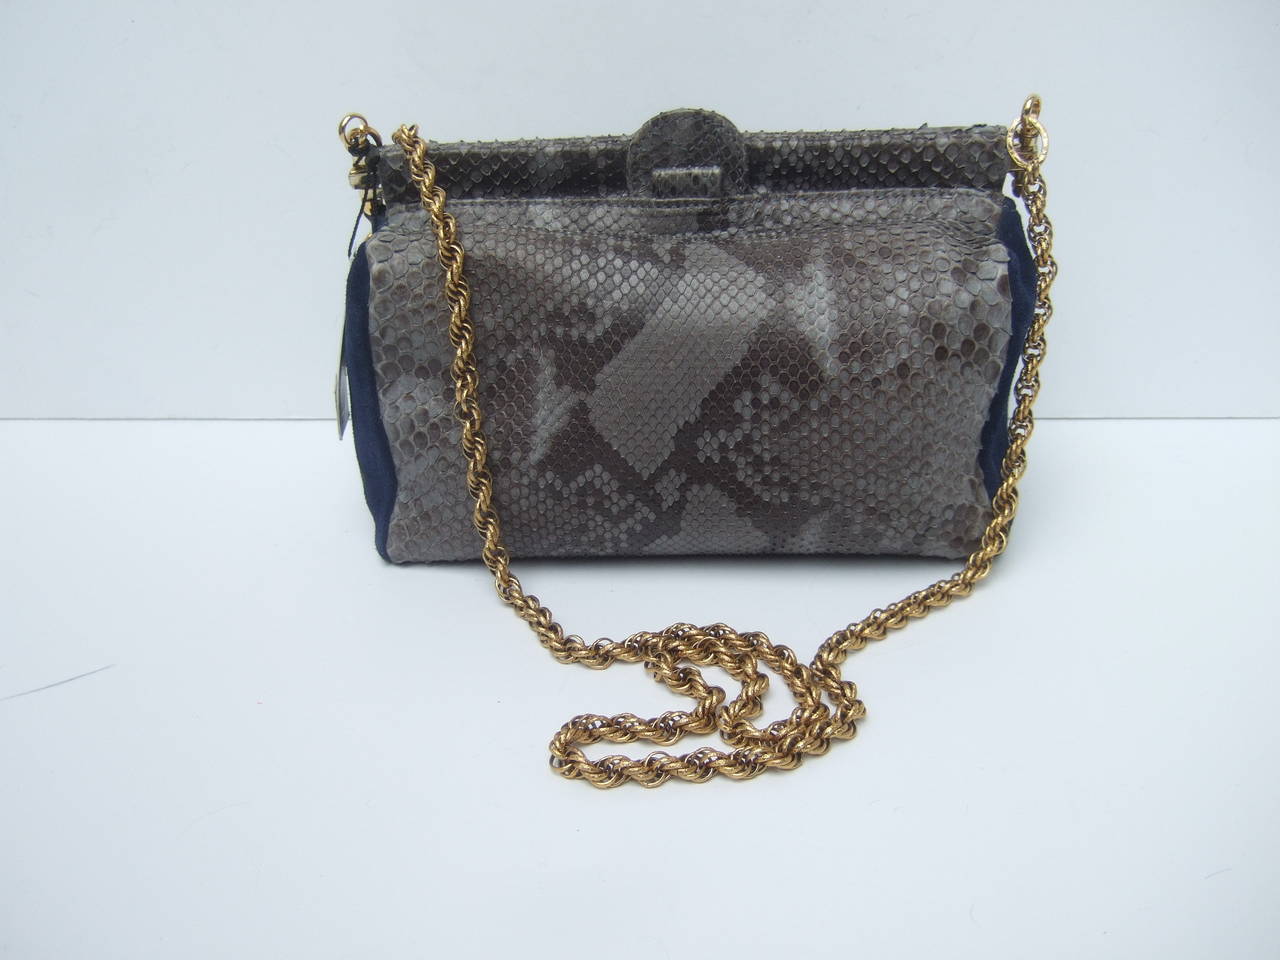 Exotic Python Handbag Designed by Meredith Wendell Italy 2